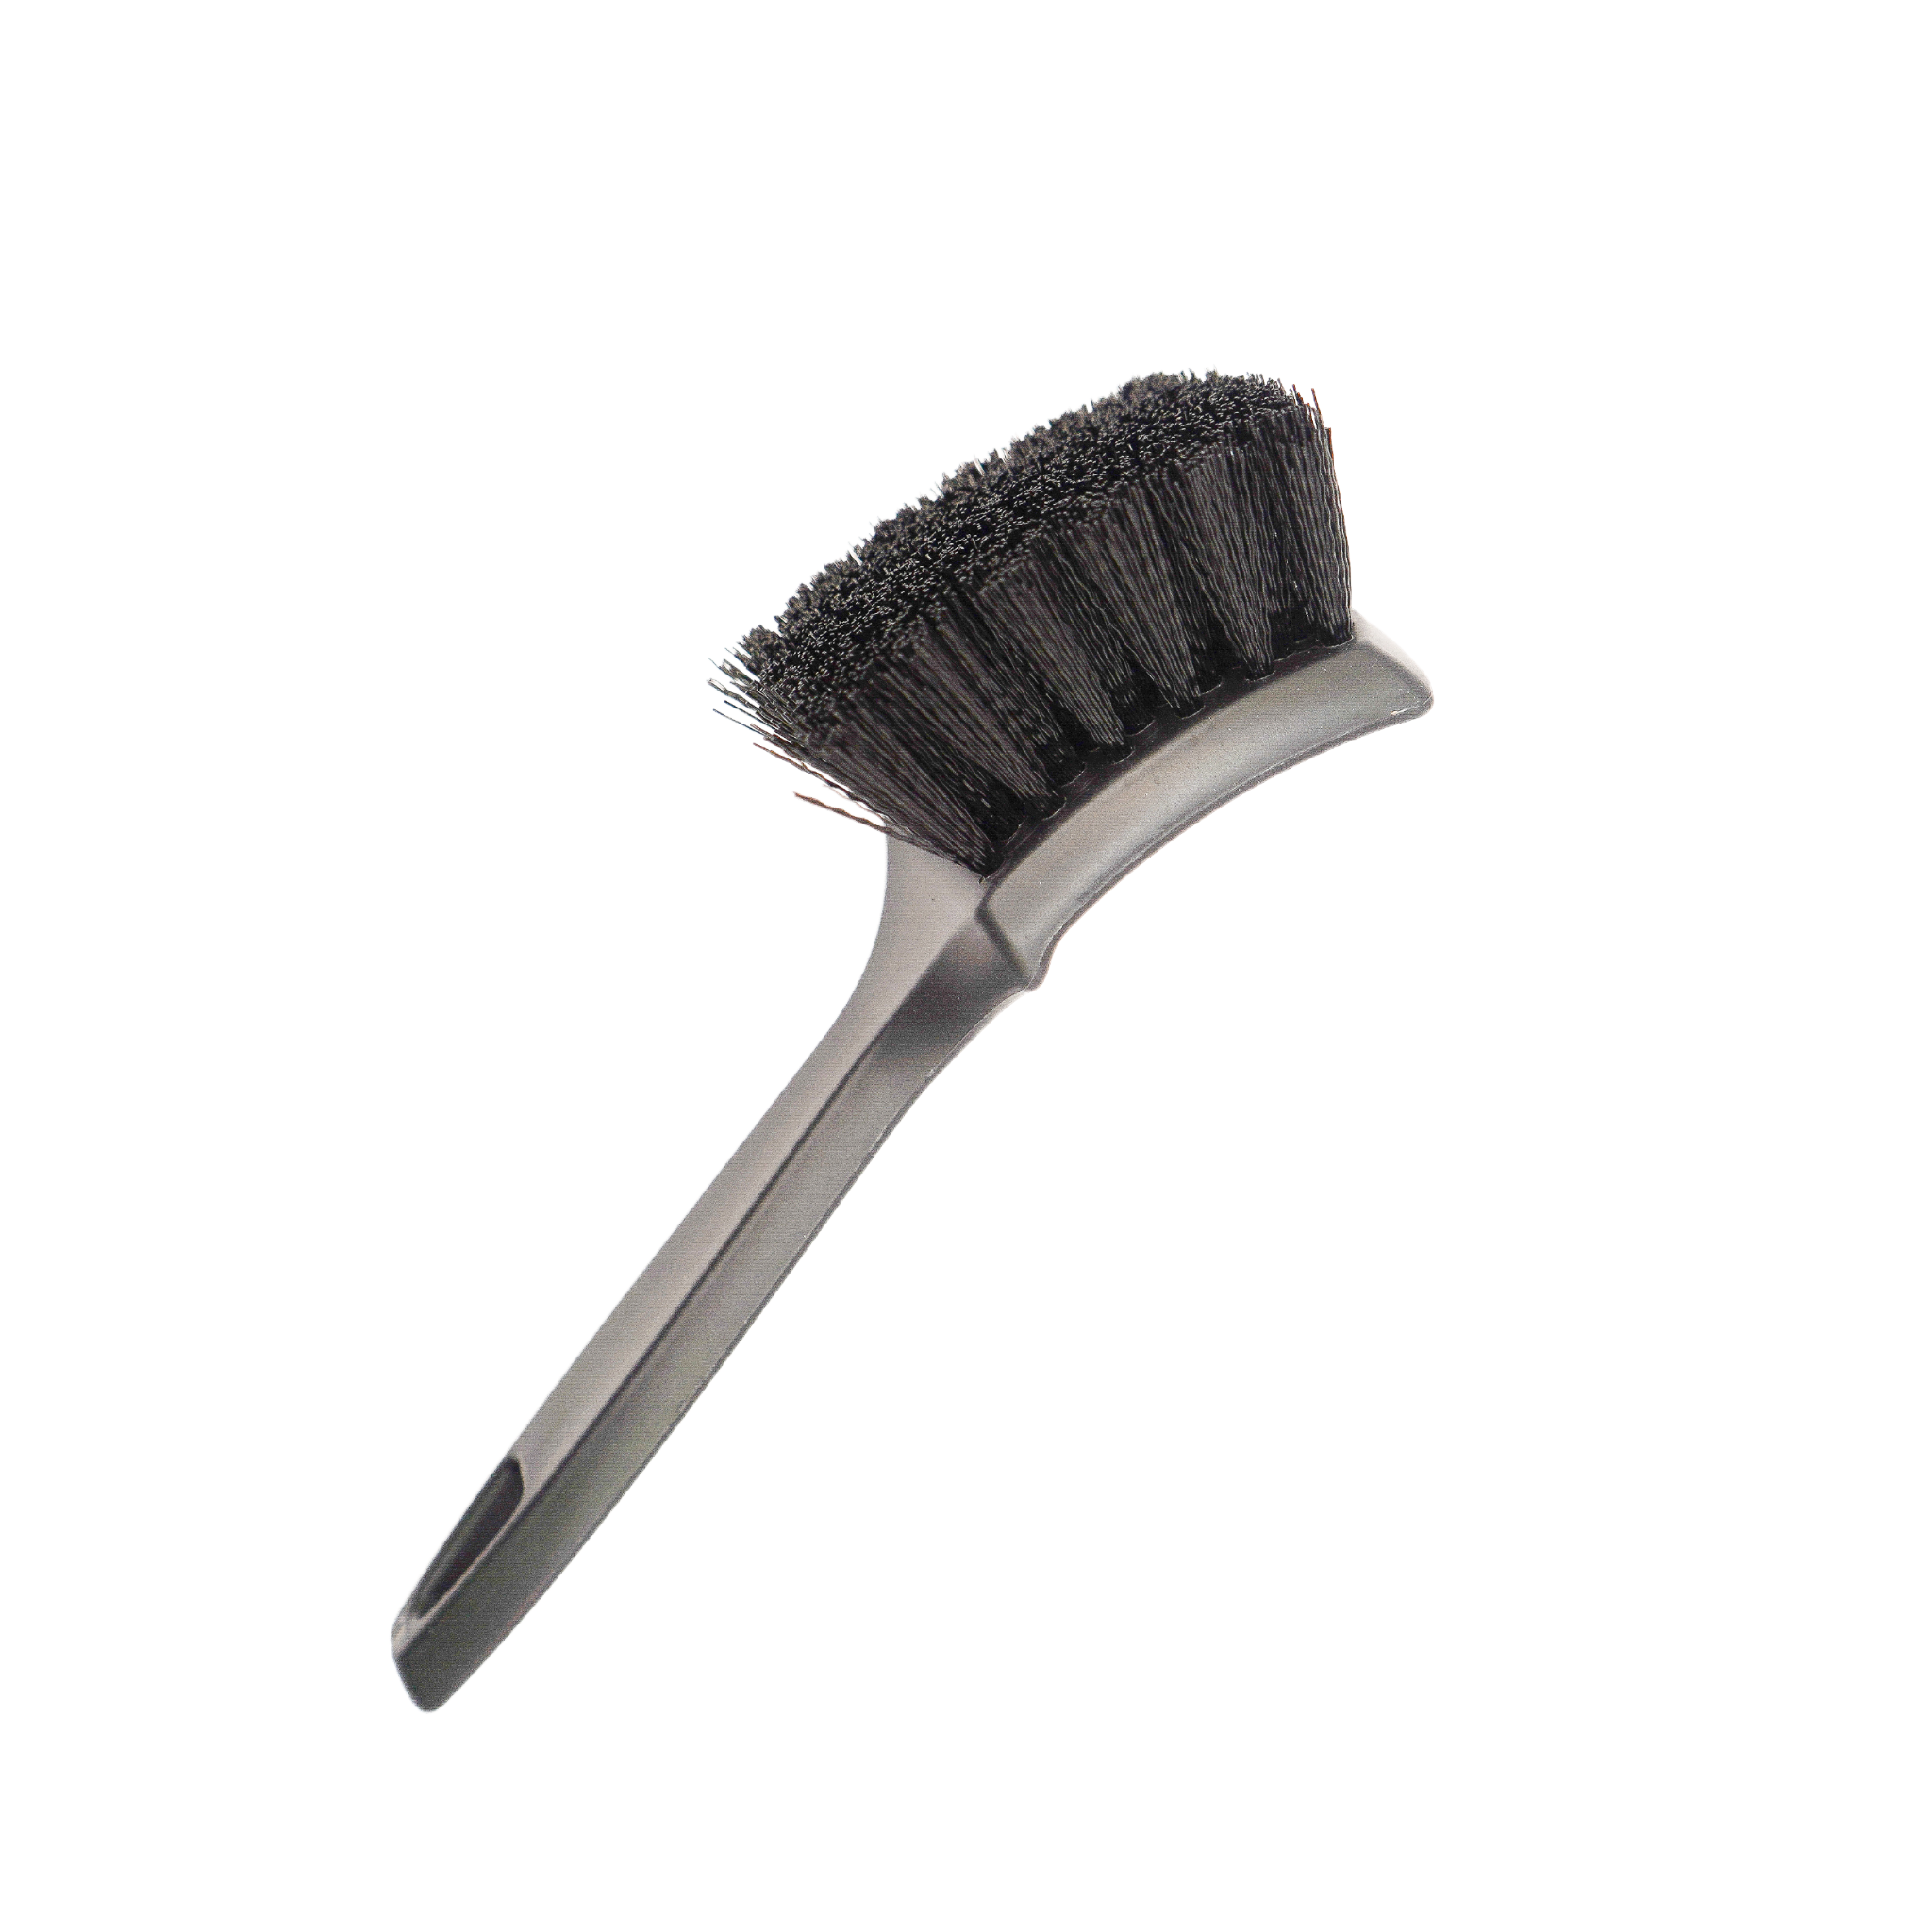 2 Pack Auto Brush, Stiff Bristle Wheel Cleaning Brush and Car Carpet Brush